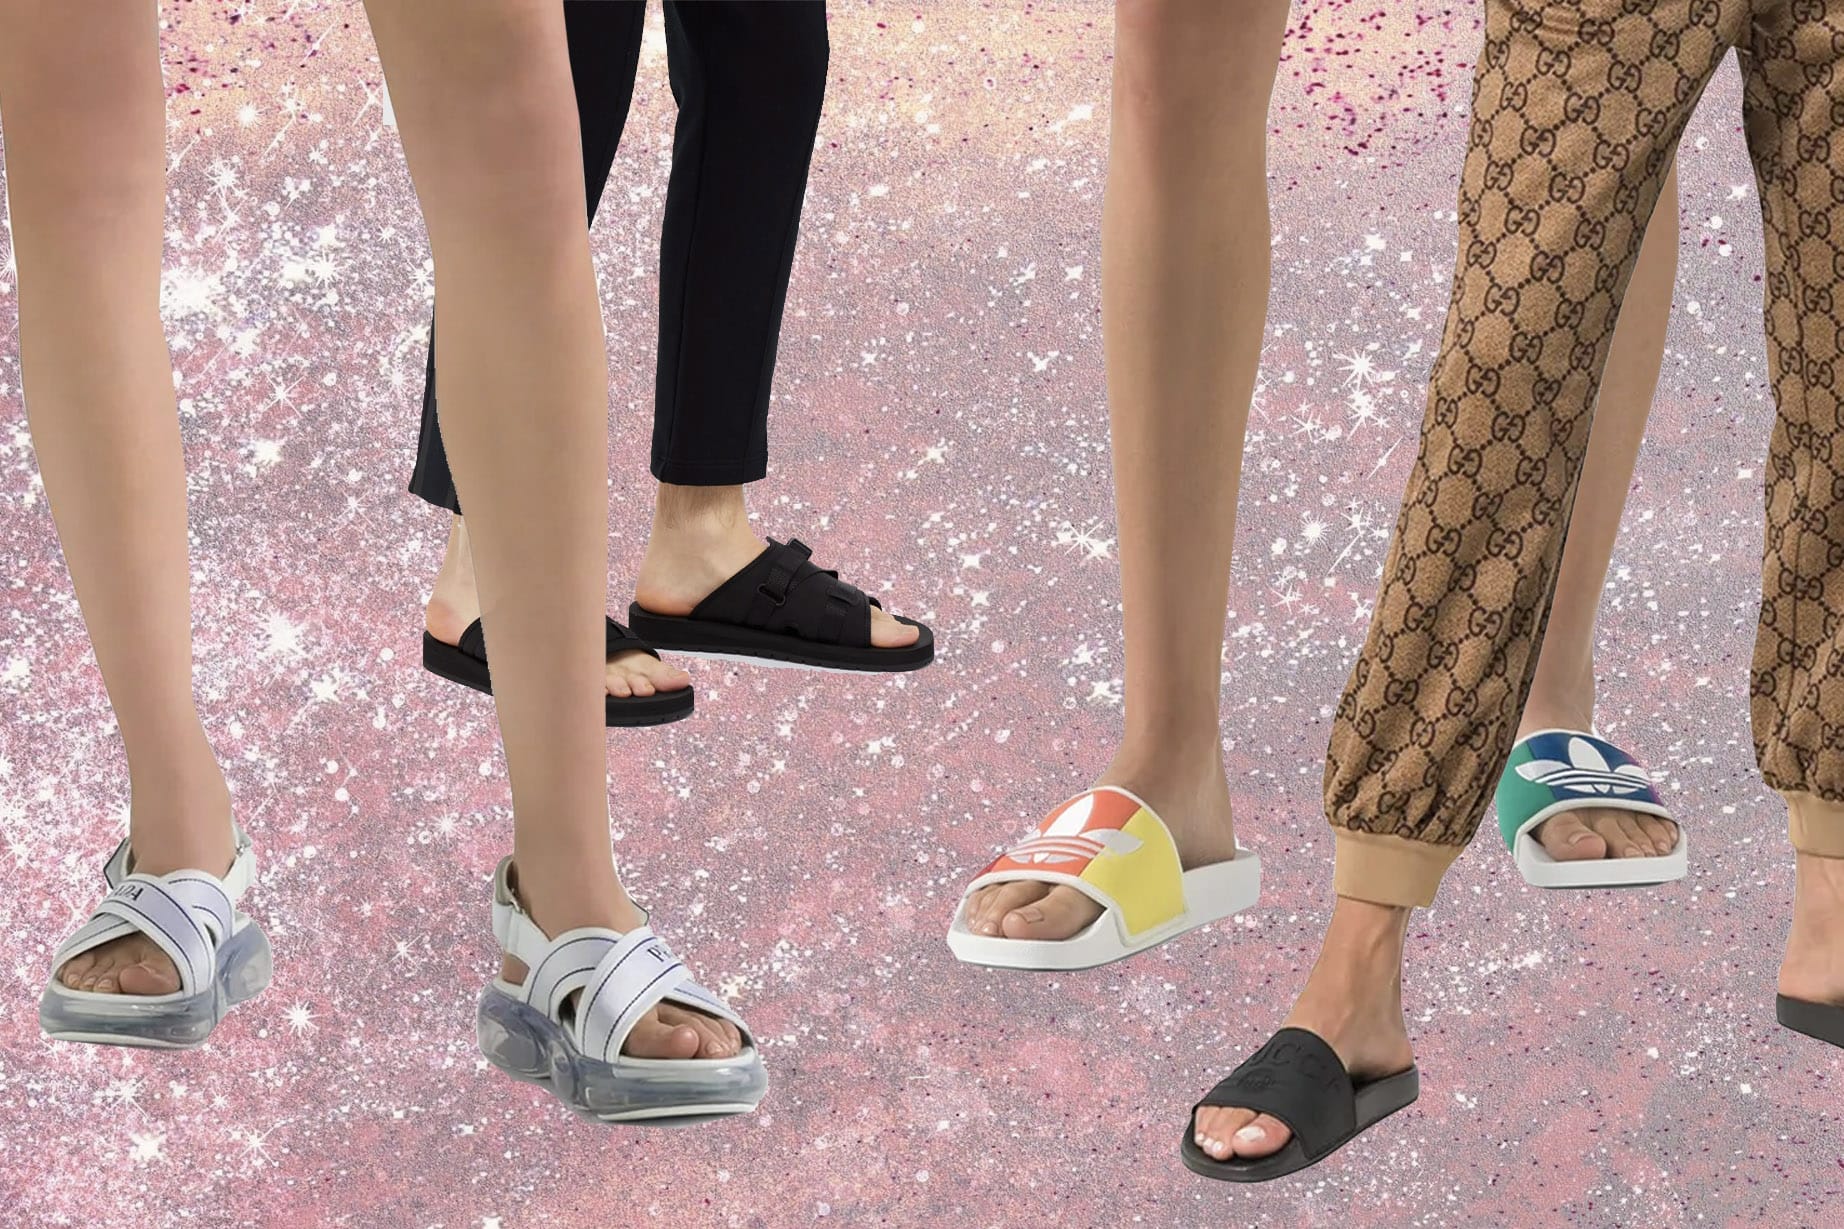 Best Summer Sandals From Prada, Gucci 